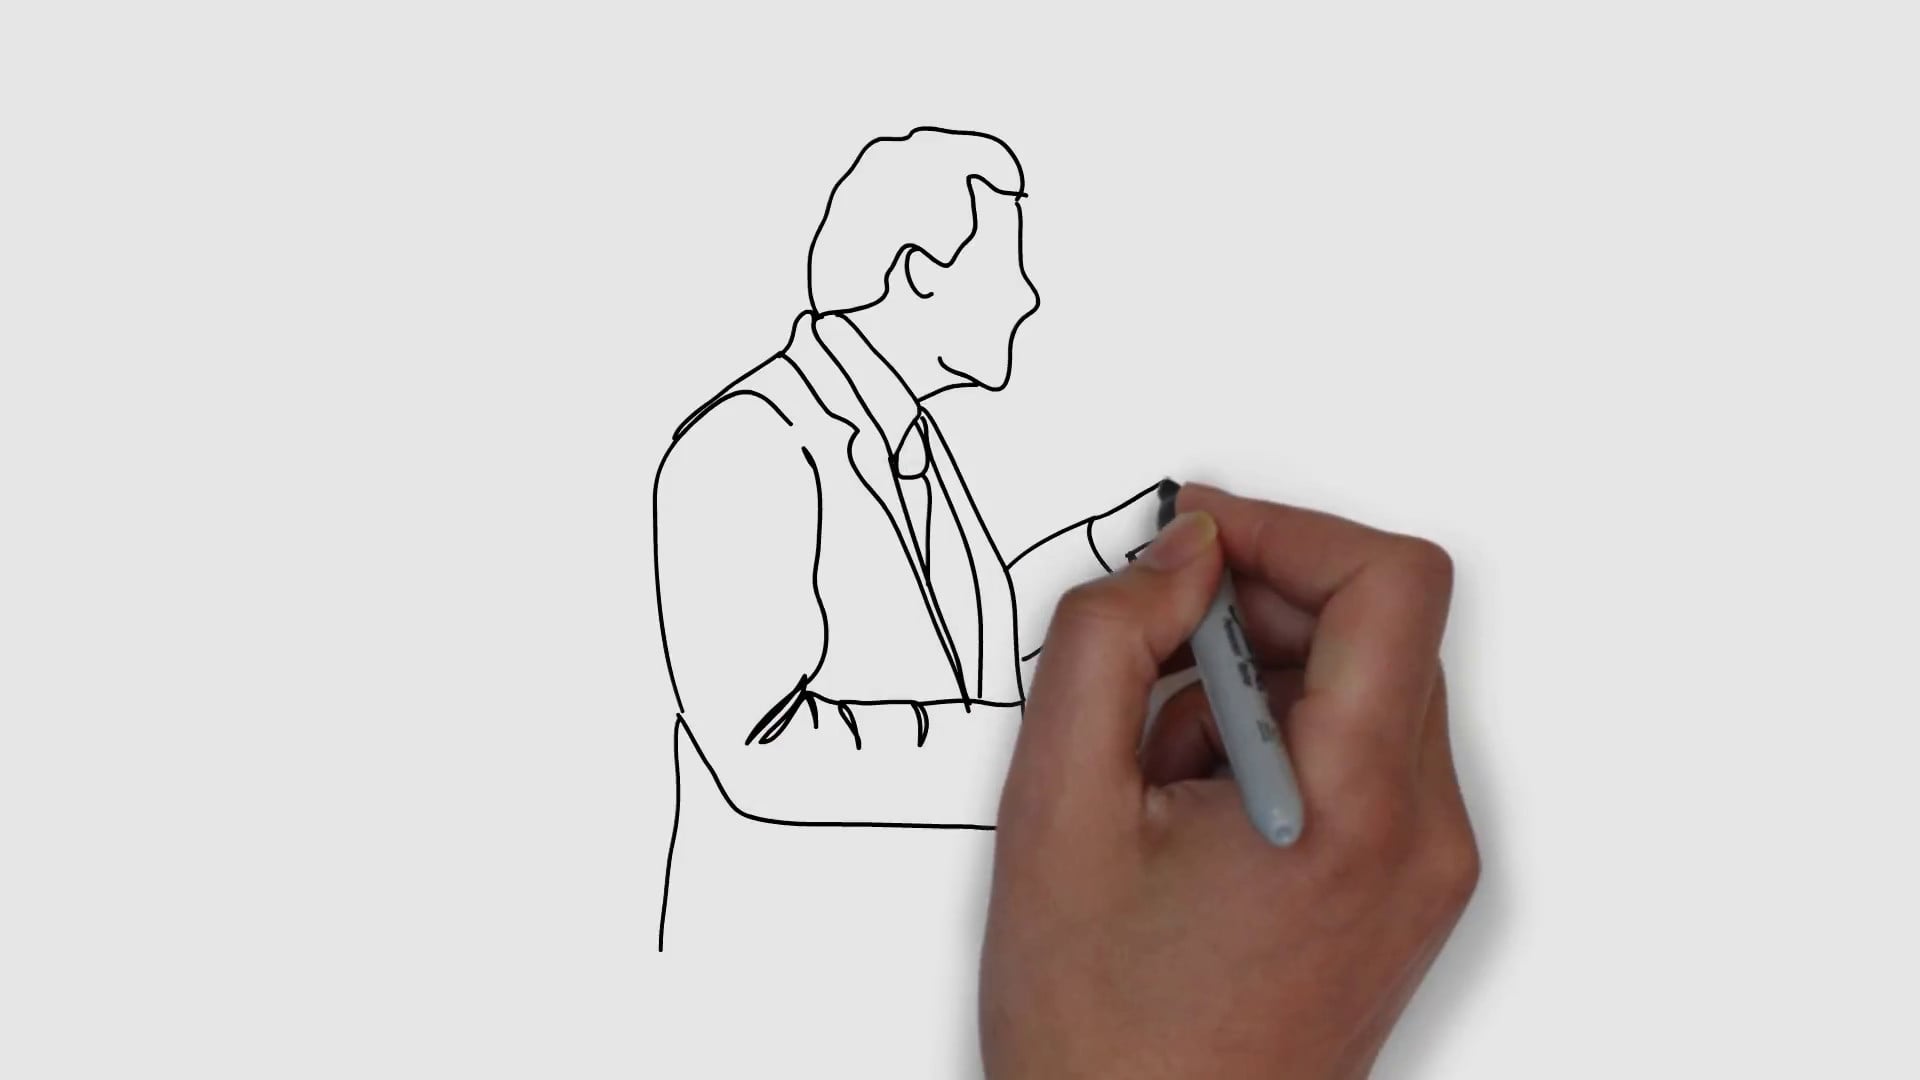 videoscribe whiteboard animation